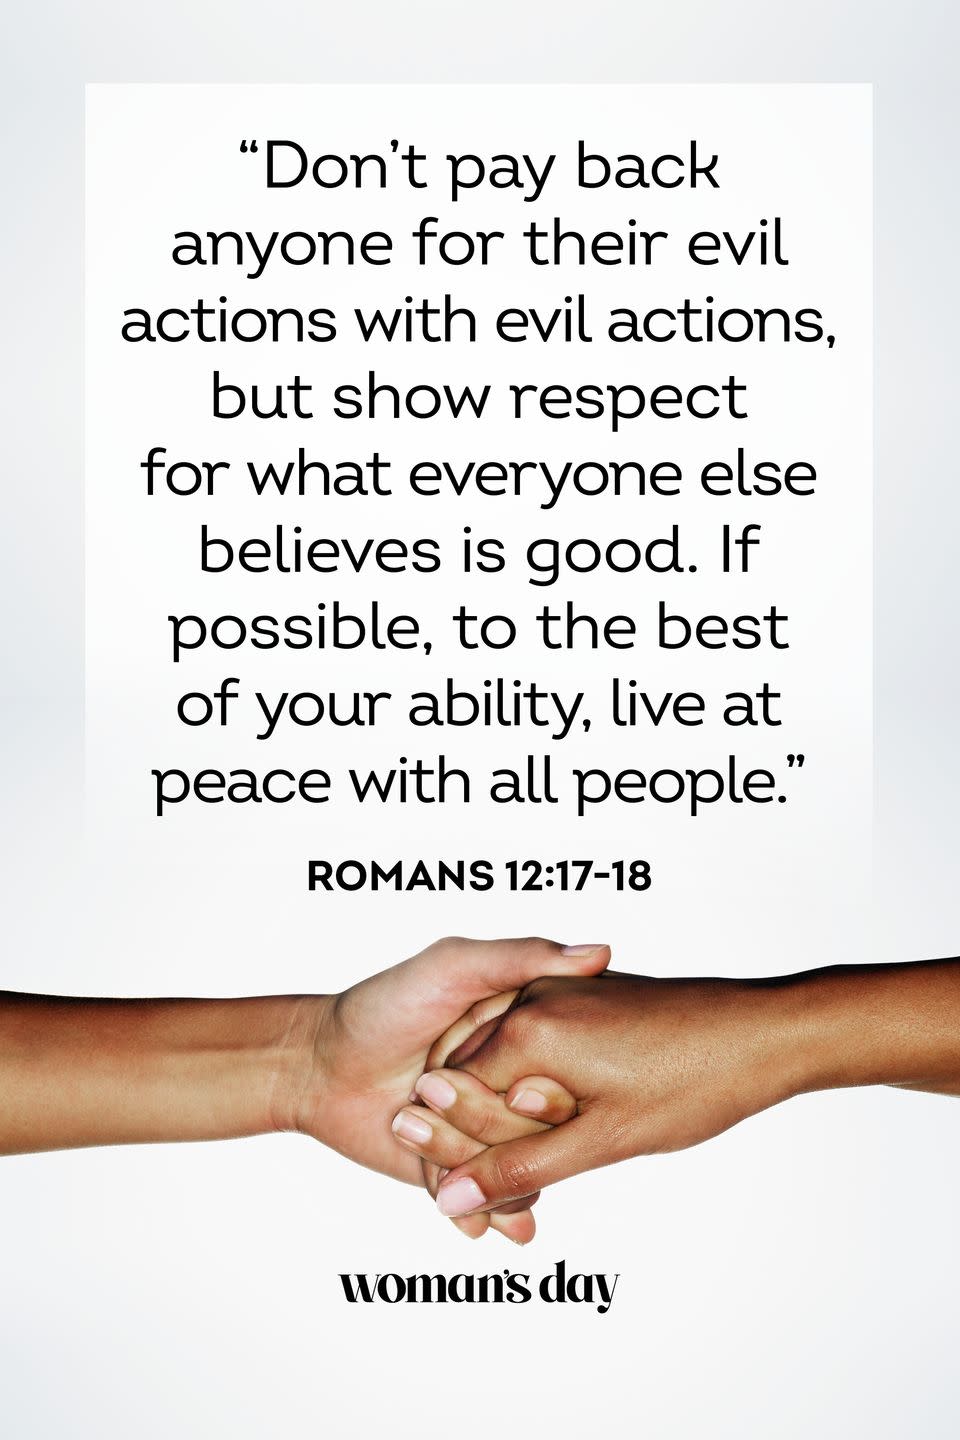 28) Romans 12:17-18